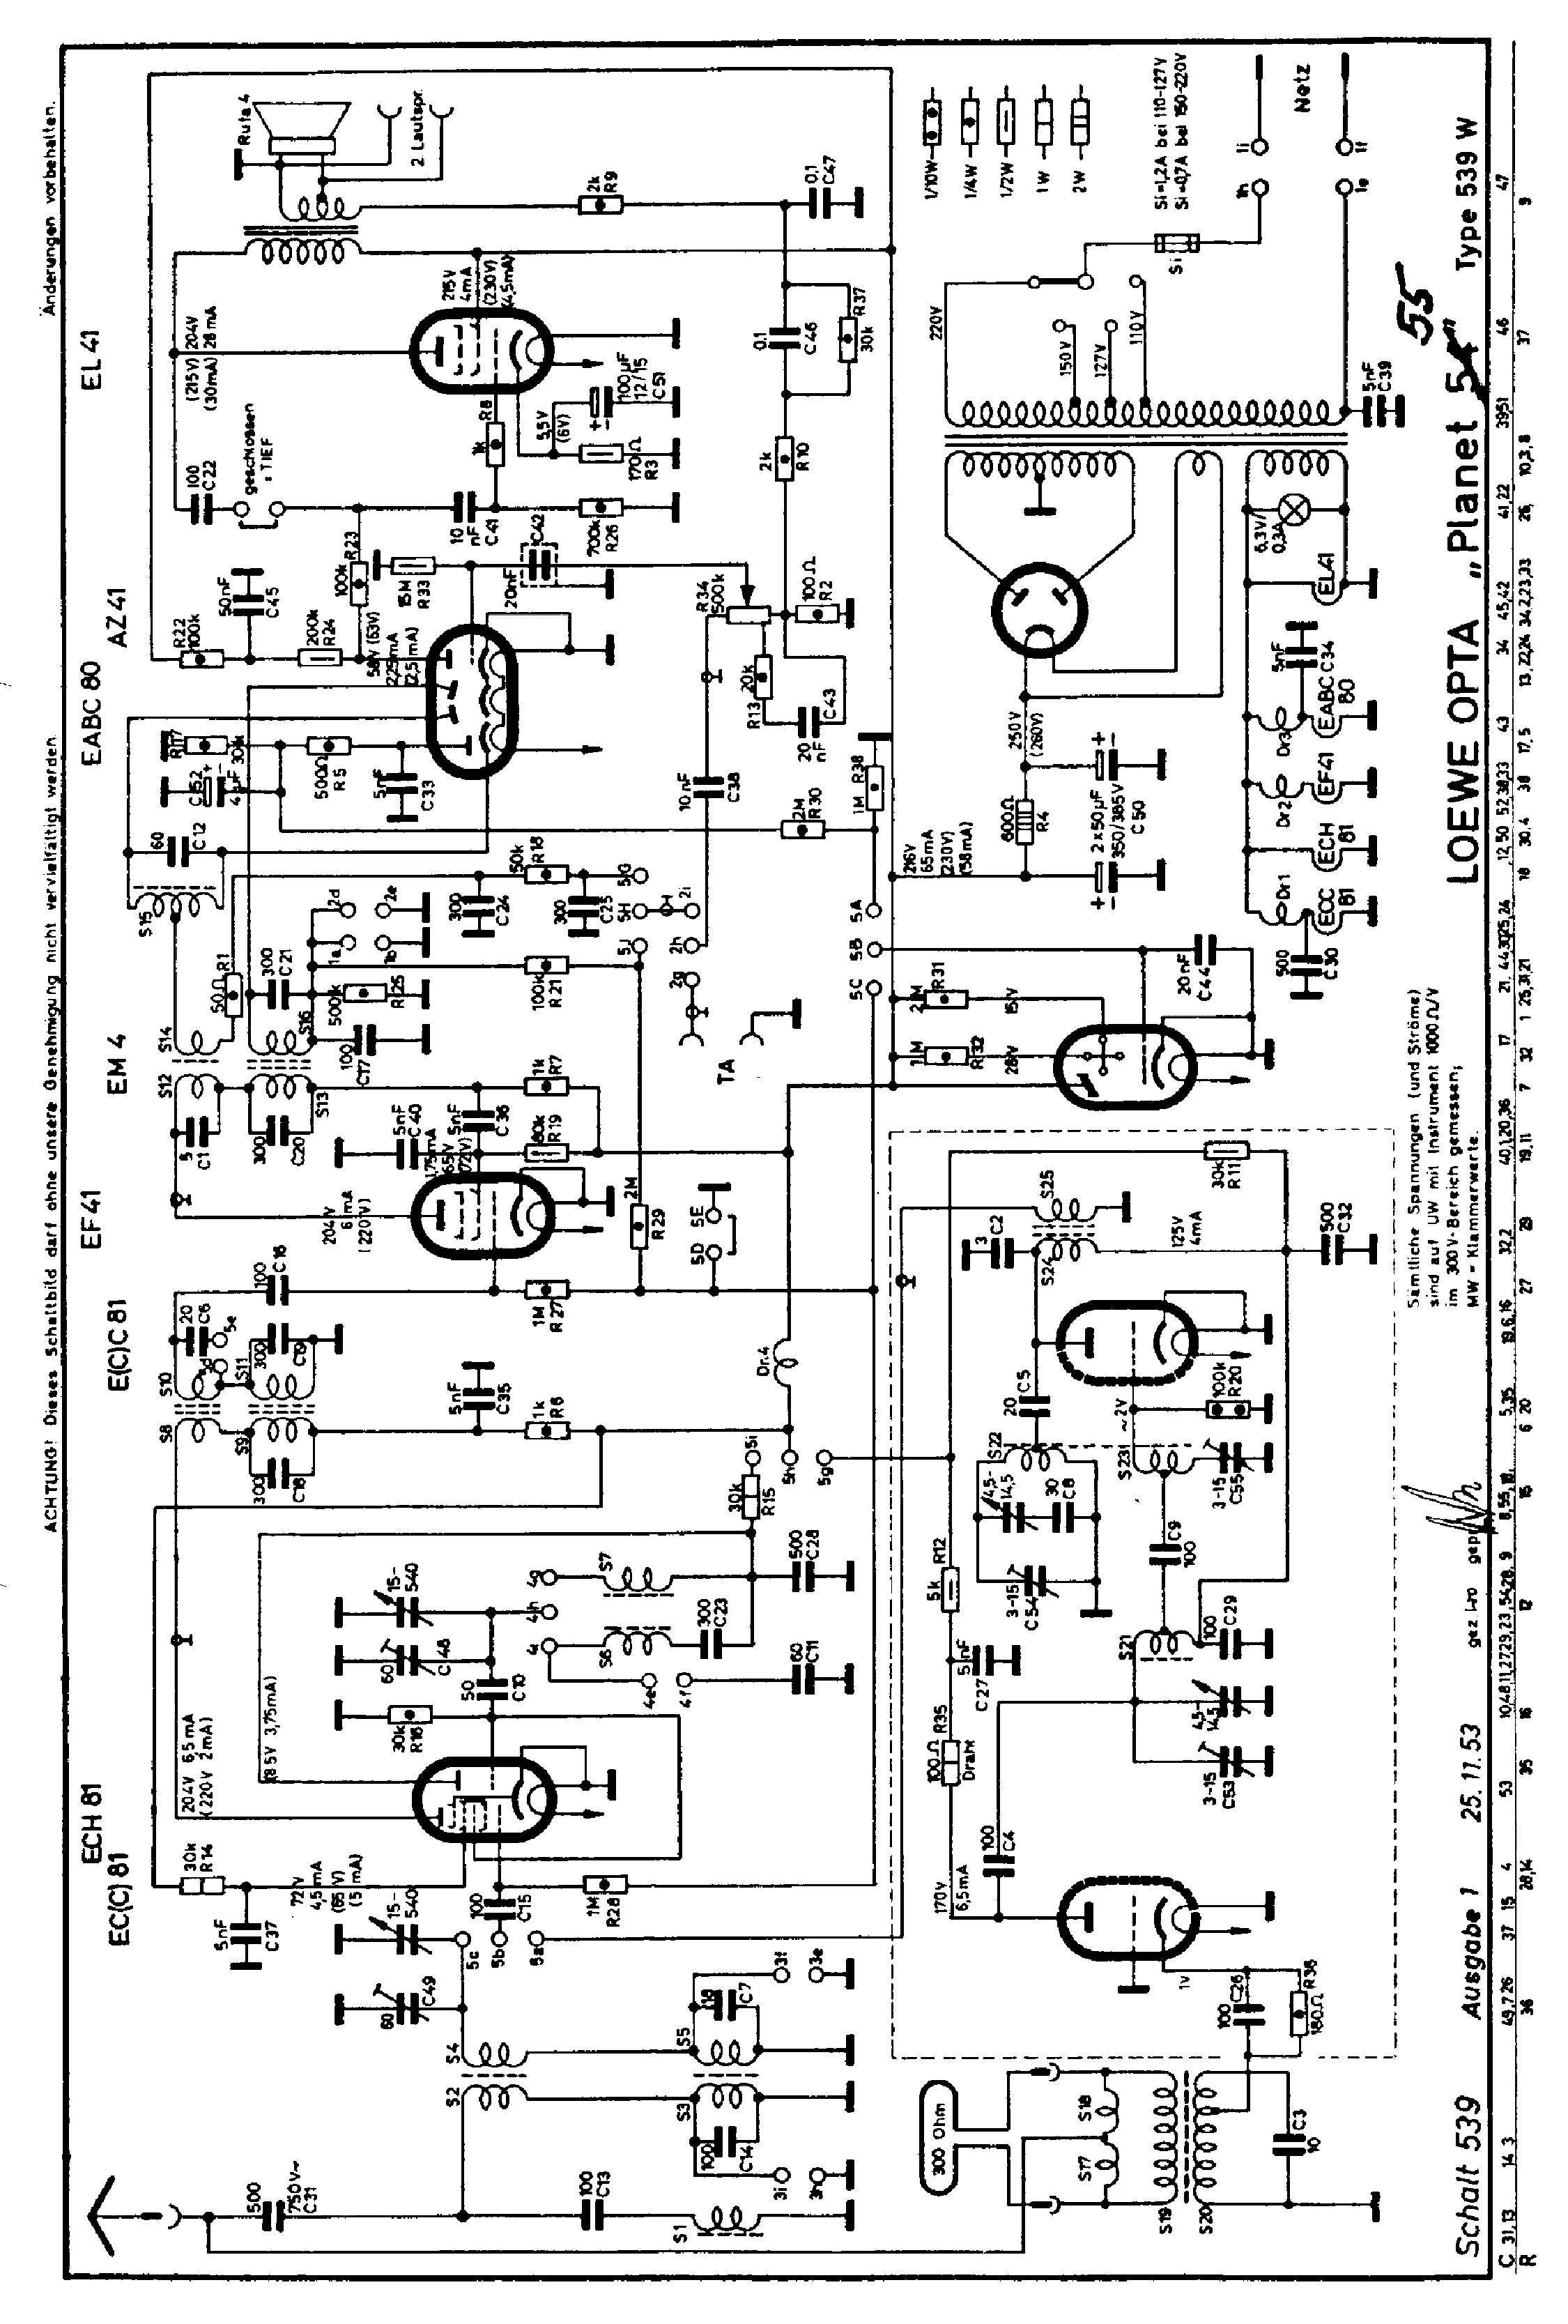 LOEWEOPTA 539W PLANET-55 AM-FM RECEIVER 1953 SM service manual (2nd page)